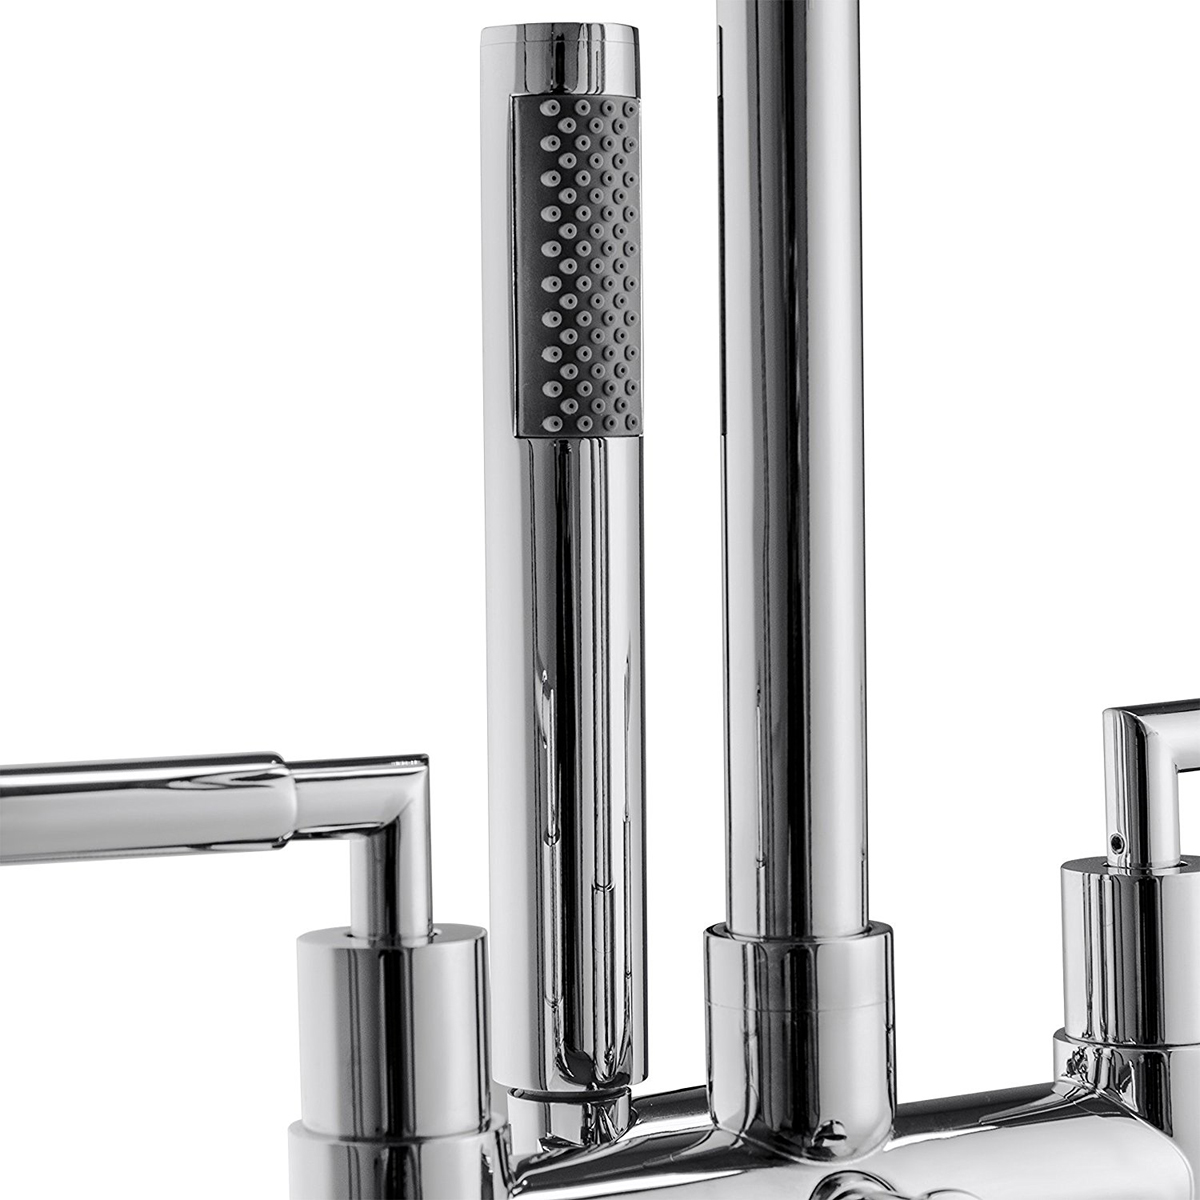 Floor Mounted Freestanding Tub Filler Bathtub Filler Faucet with Hand Shower